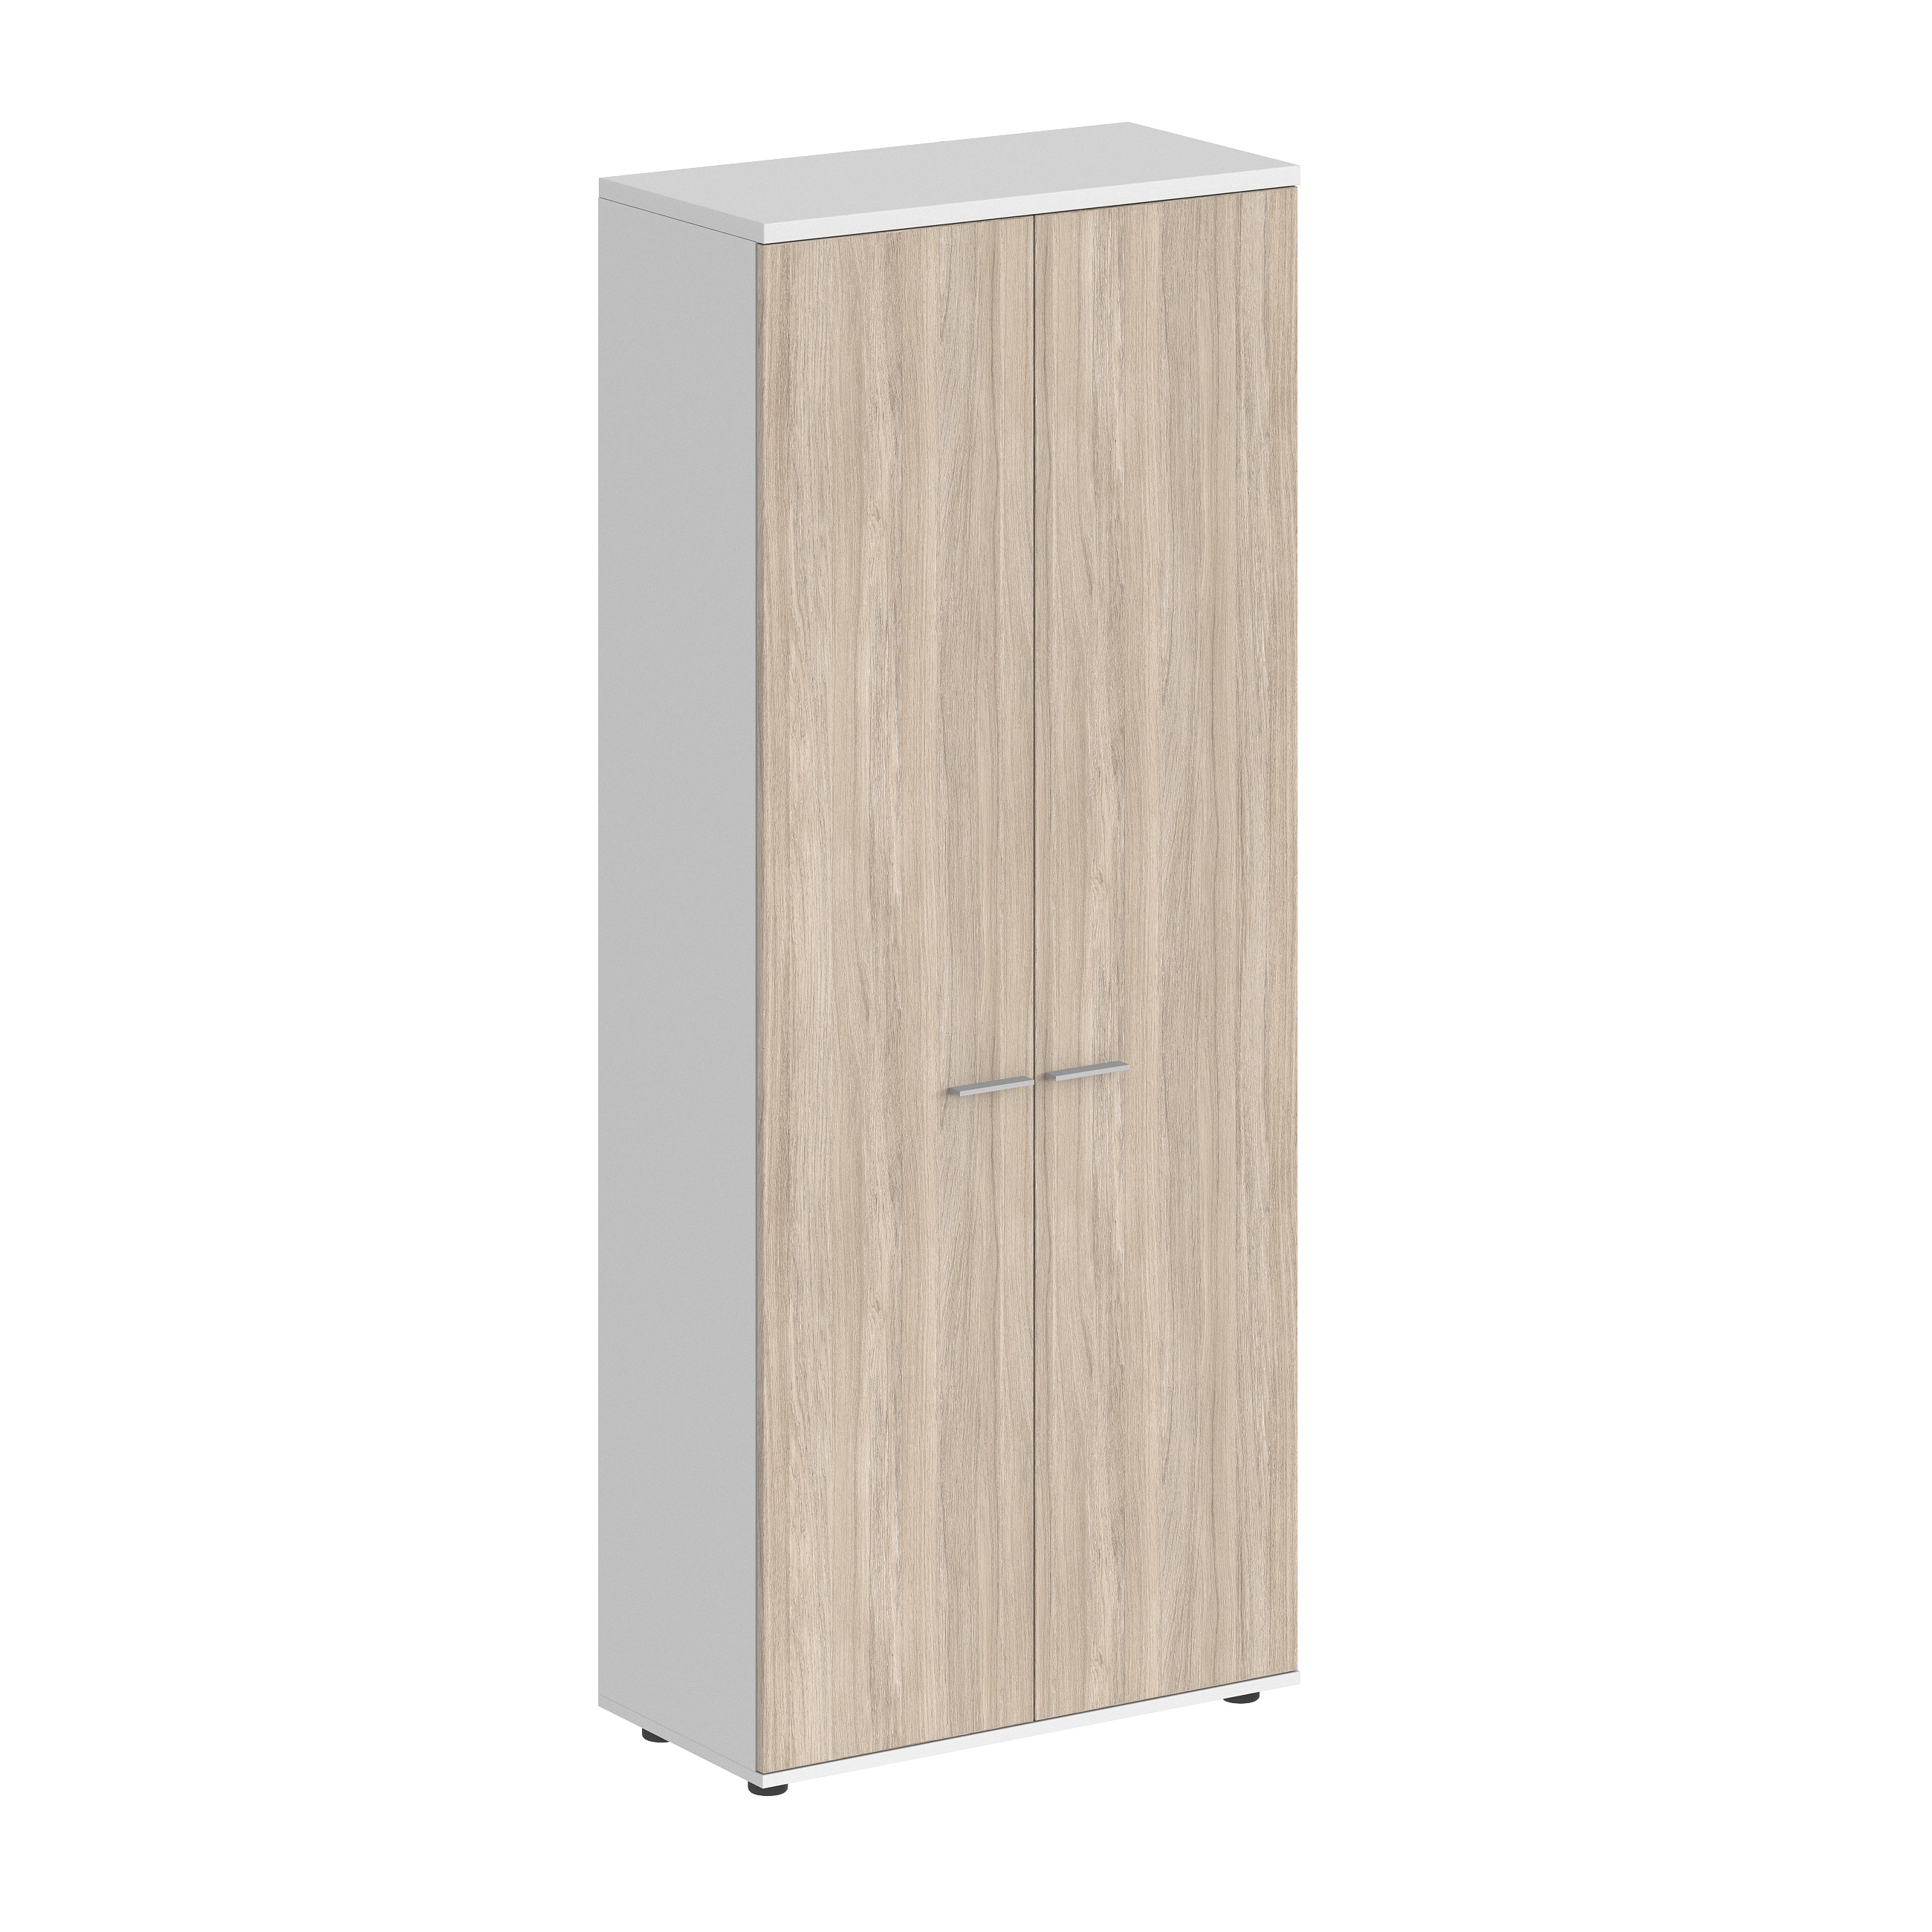 Шкаф высокий NORDEN Sigma двухдверный / задняя стенка ЛДСП (800х400х1955) SG.811.WH.OL